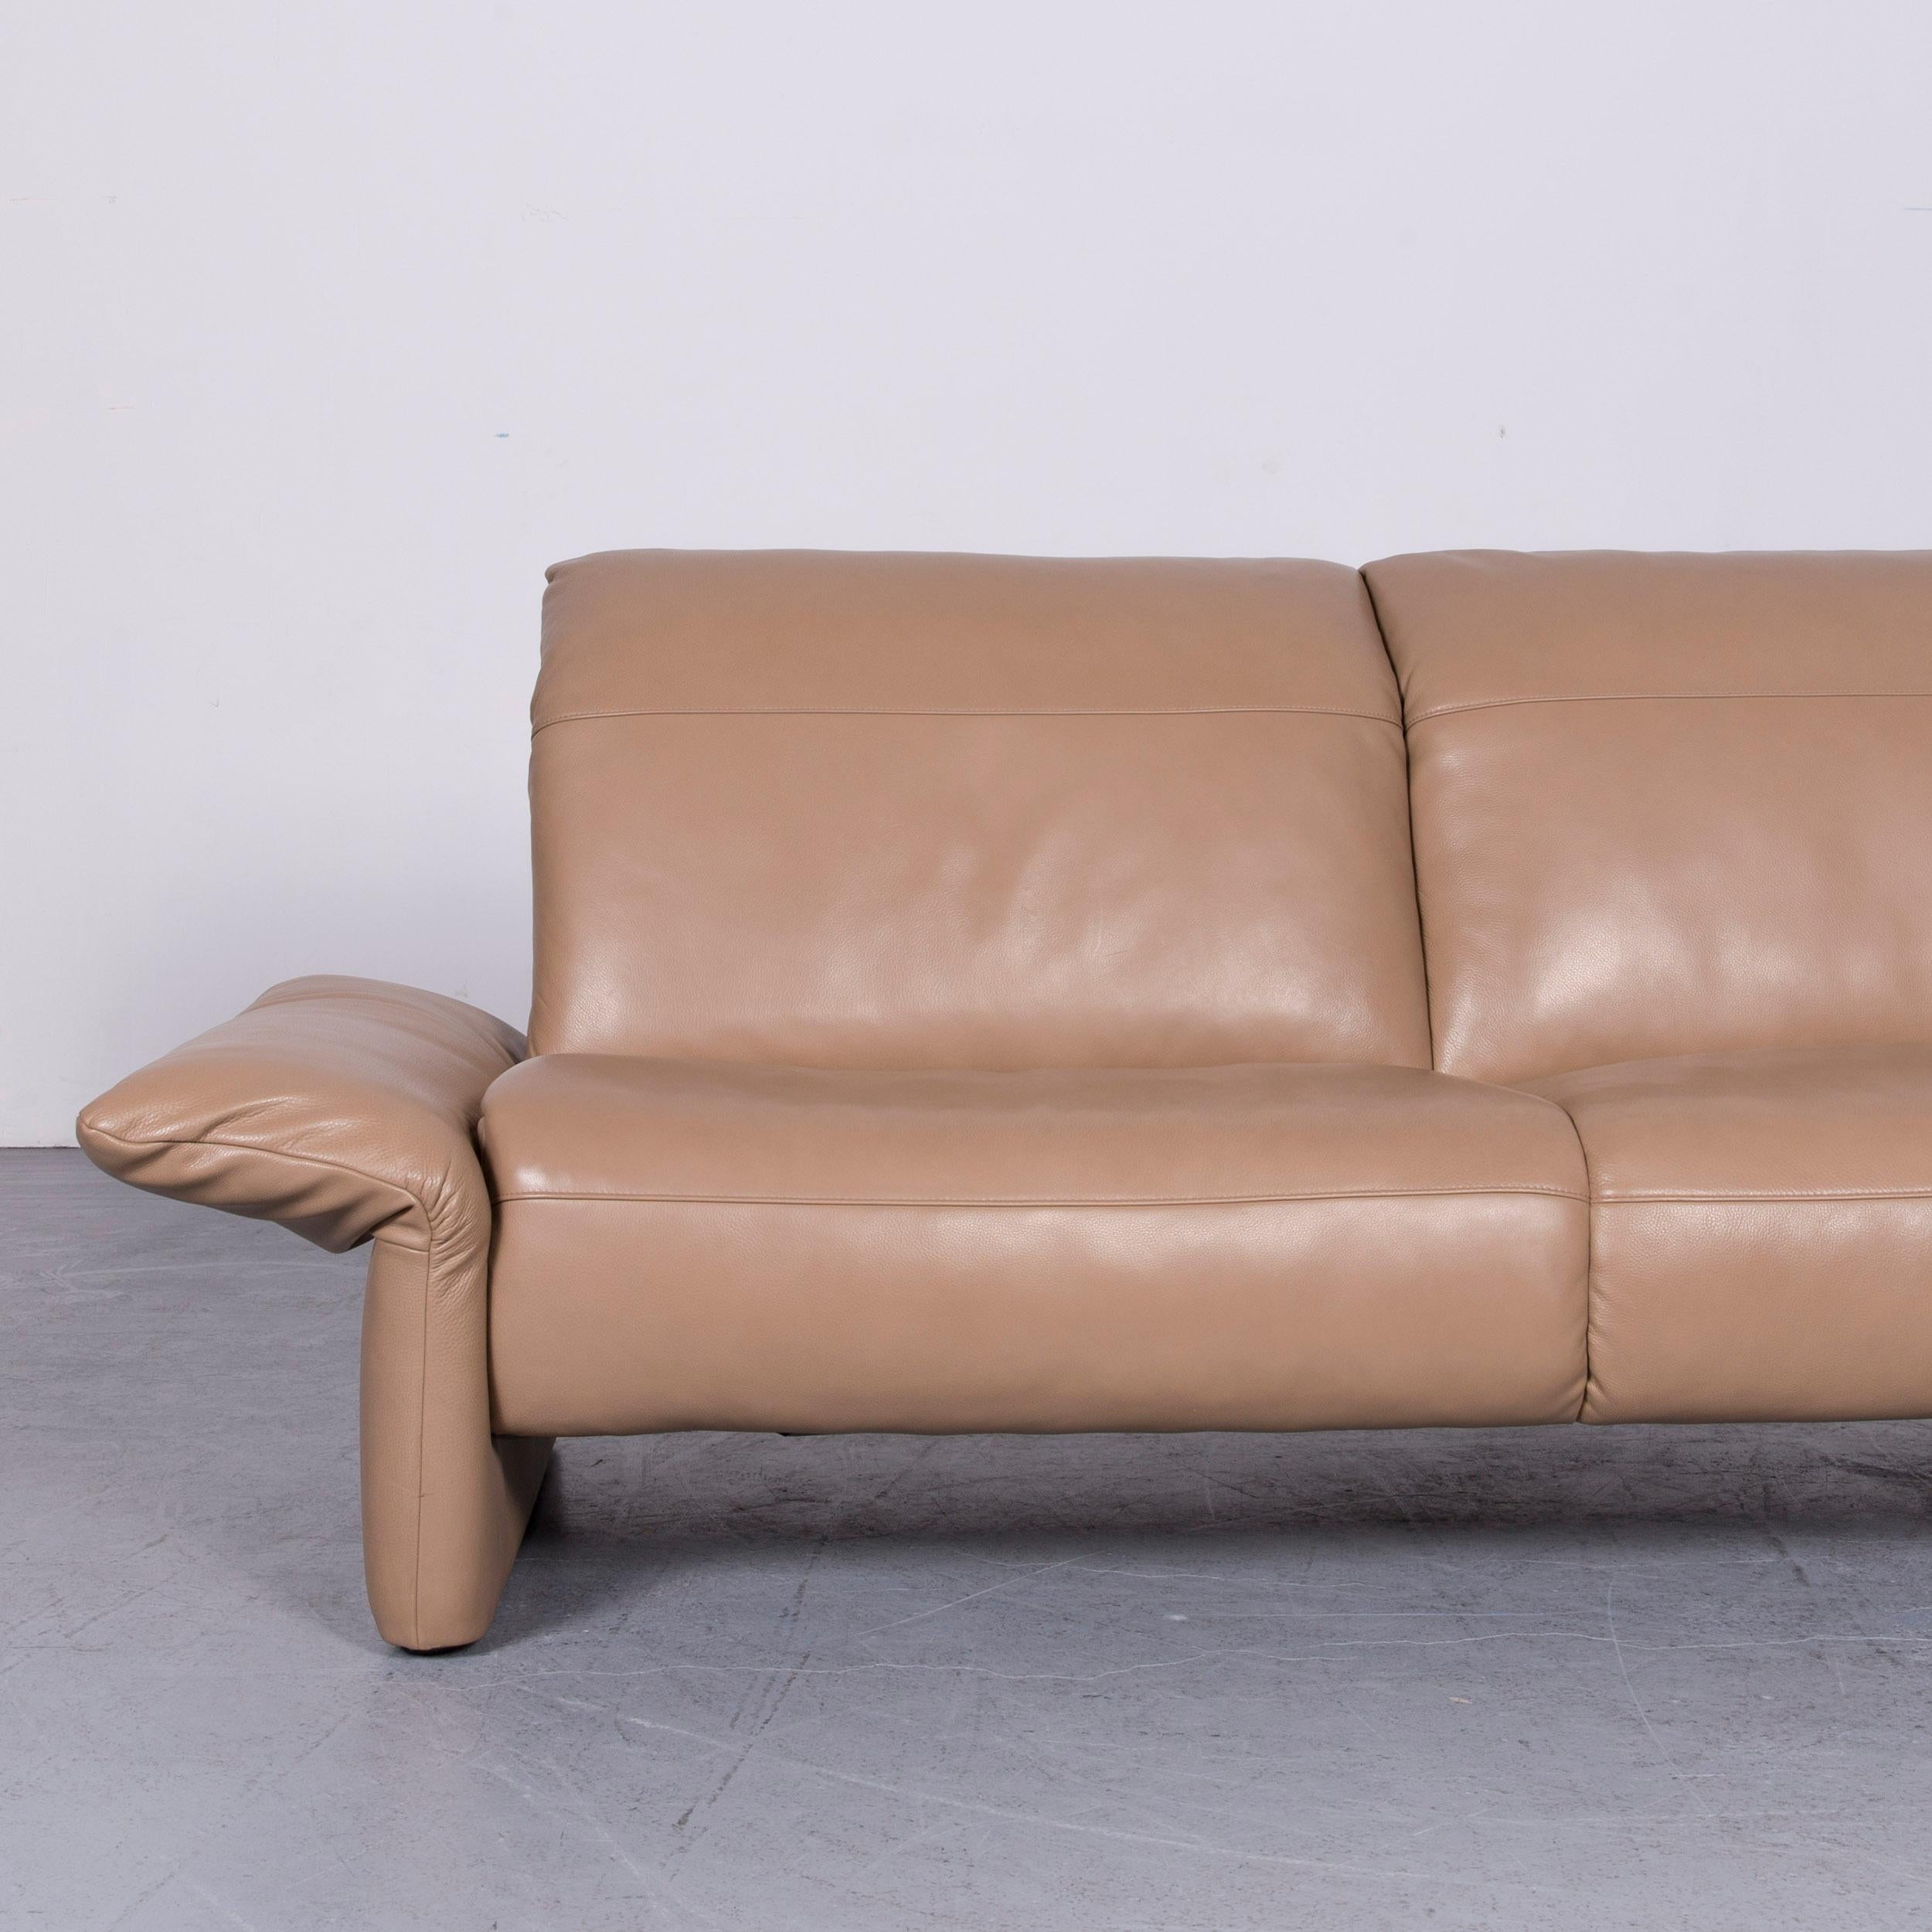 Koinor Elena Designer Leather Sofa Beige Genuine Leather Three-Seat Couch In Good Condition For Sale In Cologne, DE